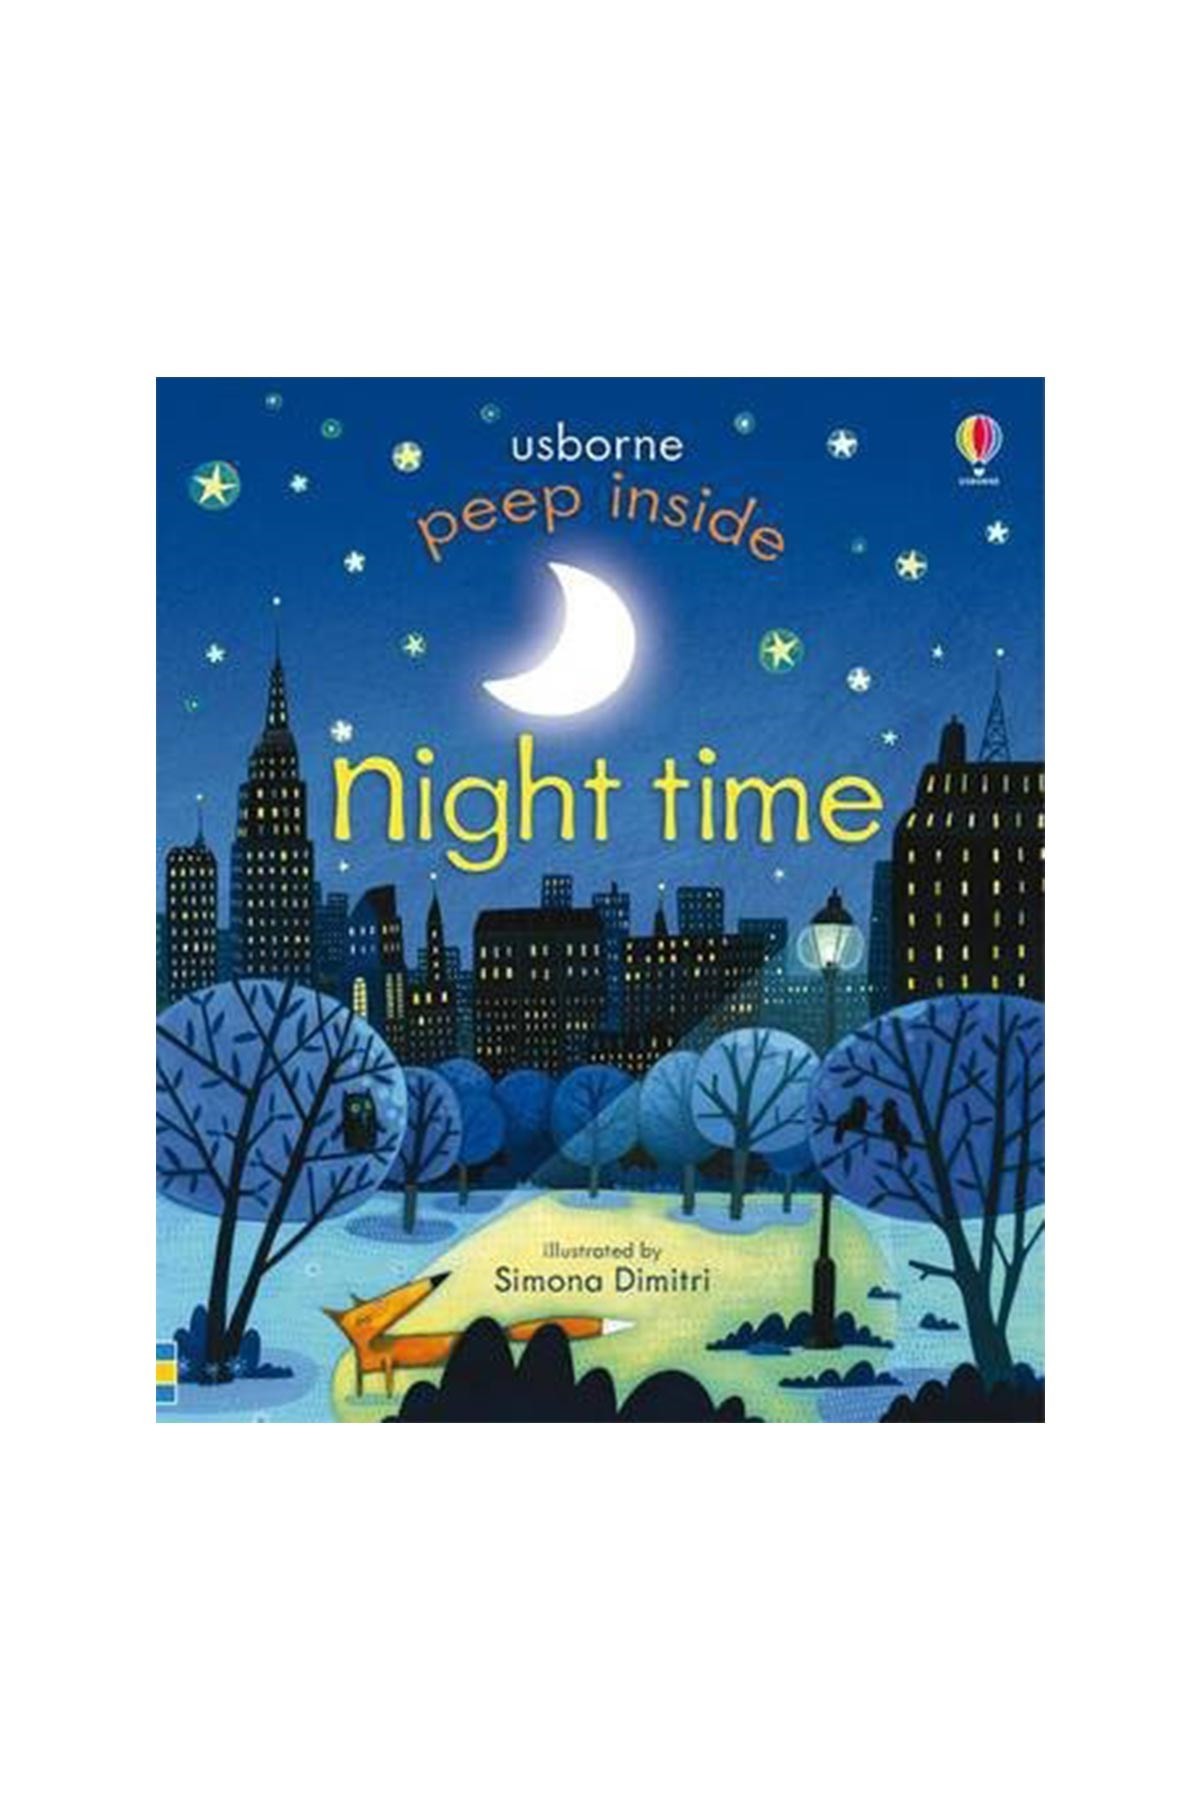 The Usborne Peep Inside Night Time